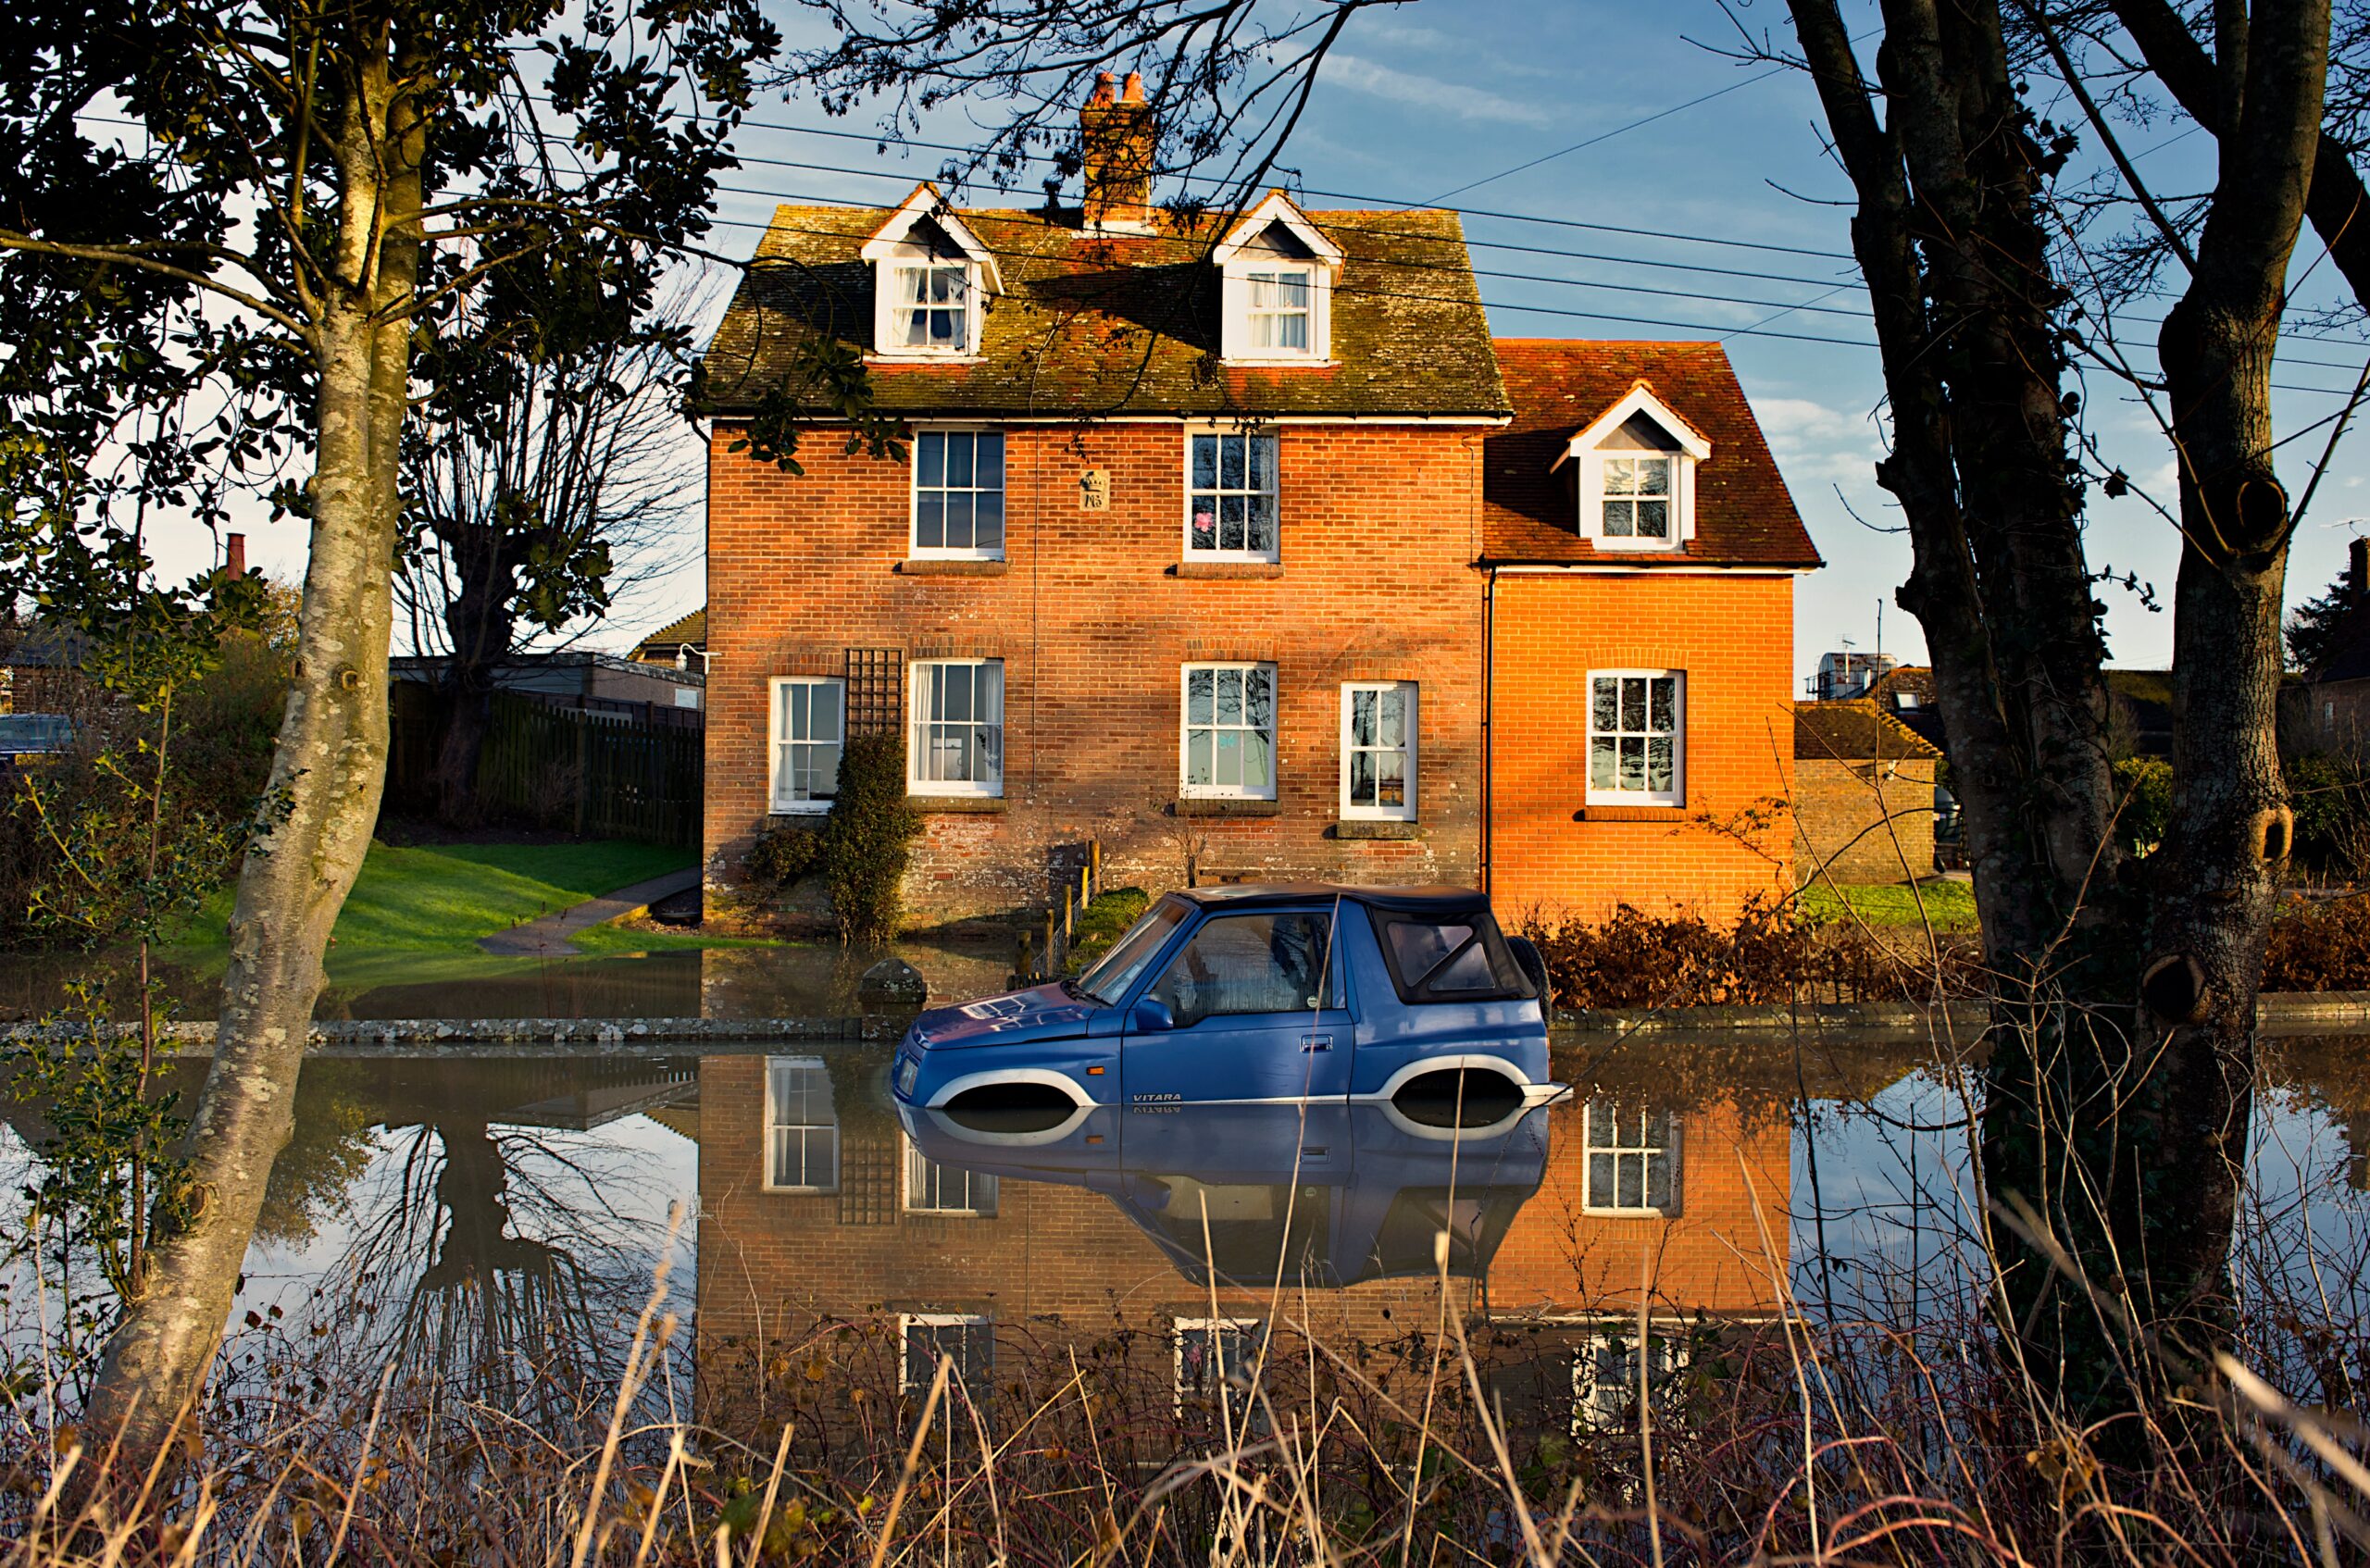 House with car on flooded street.